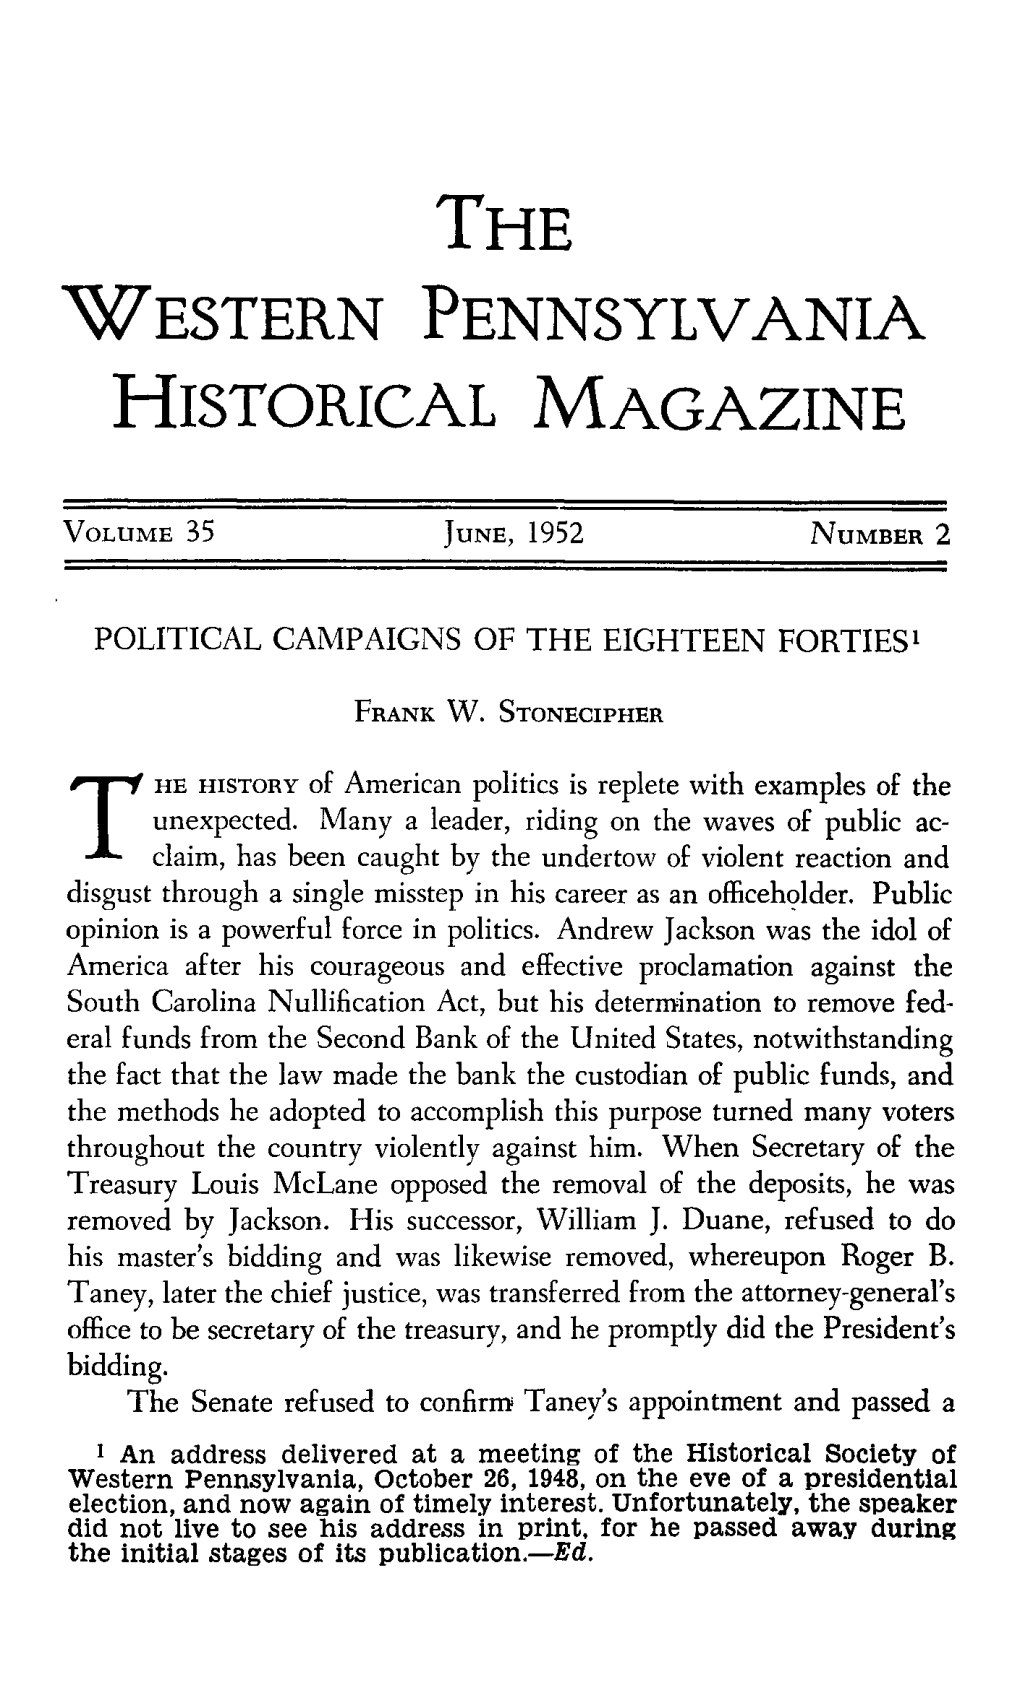 The Historical Magazine